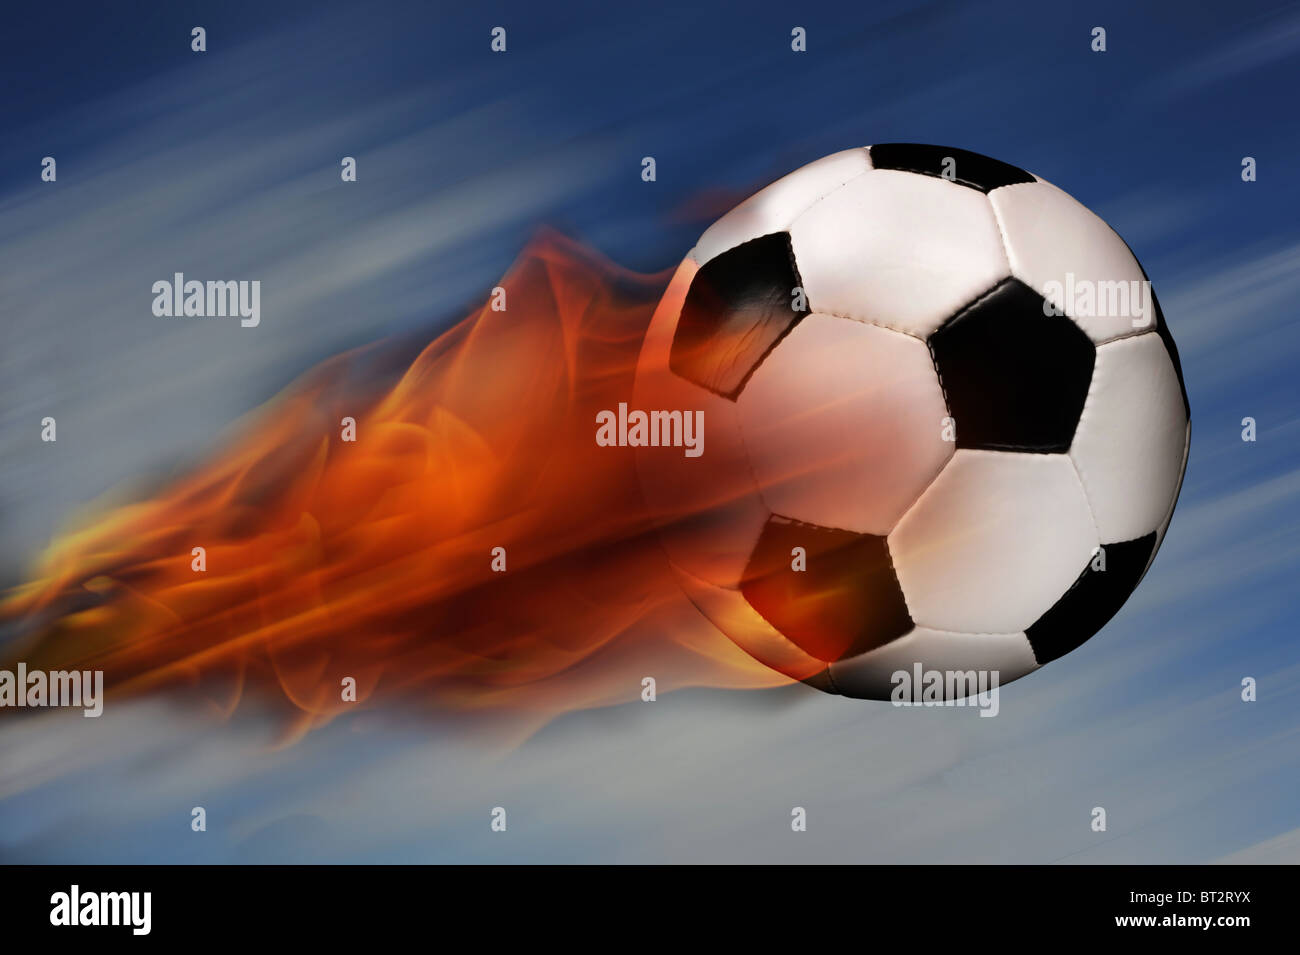 Soccer ball on fire. Stock Photo